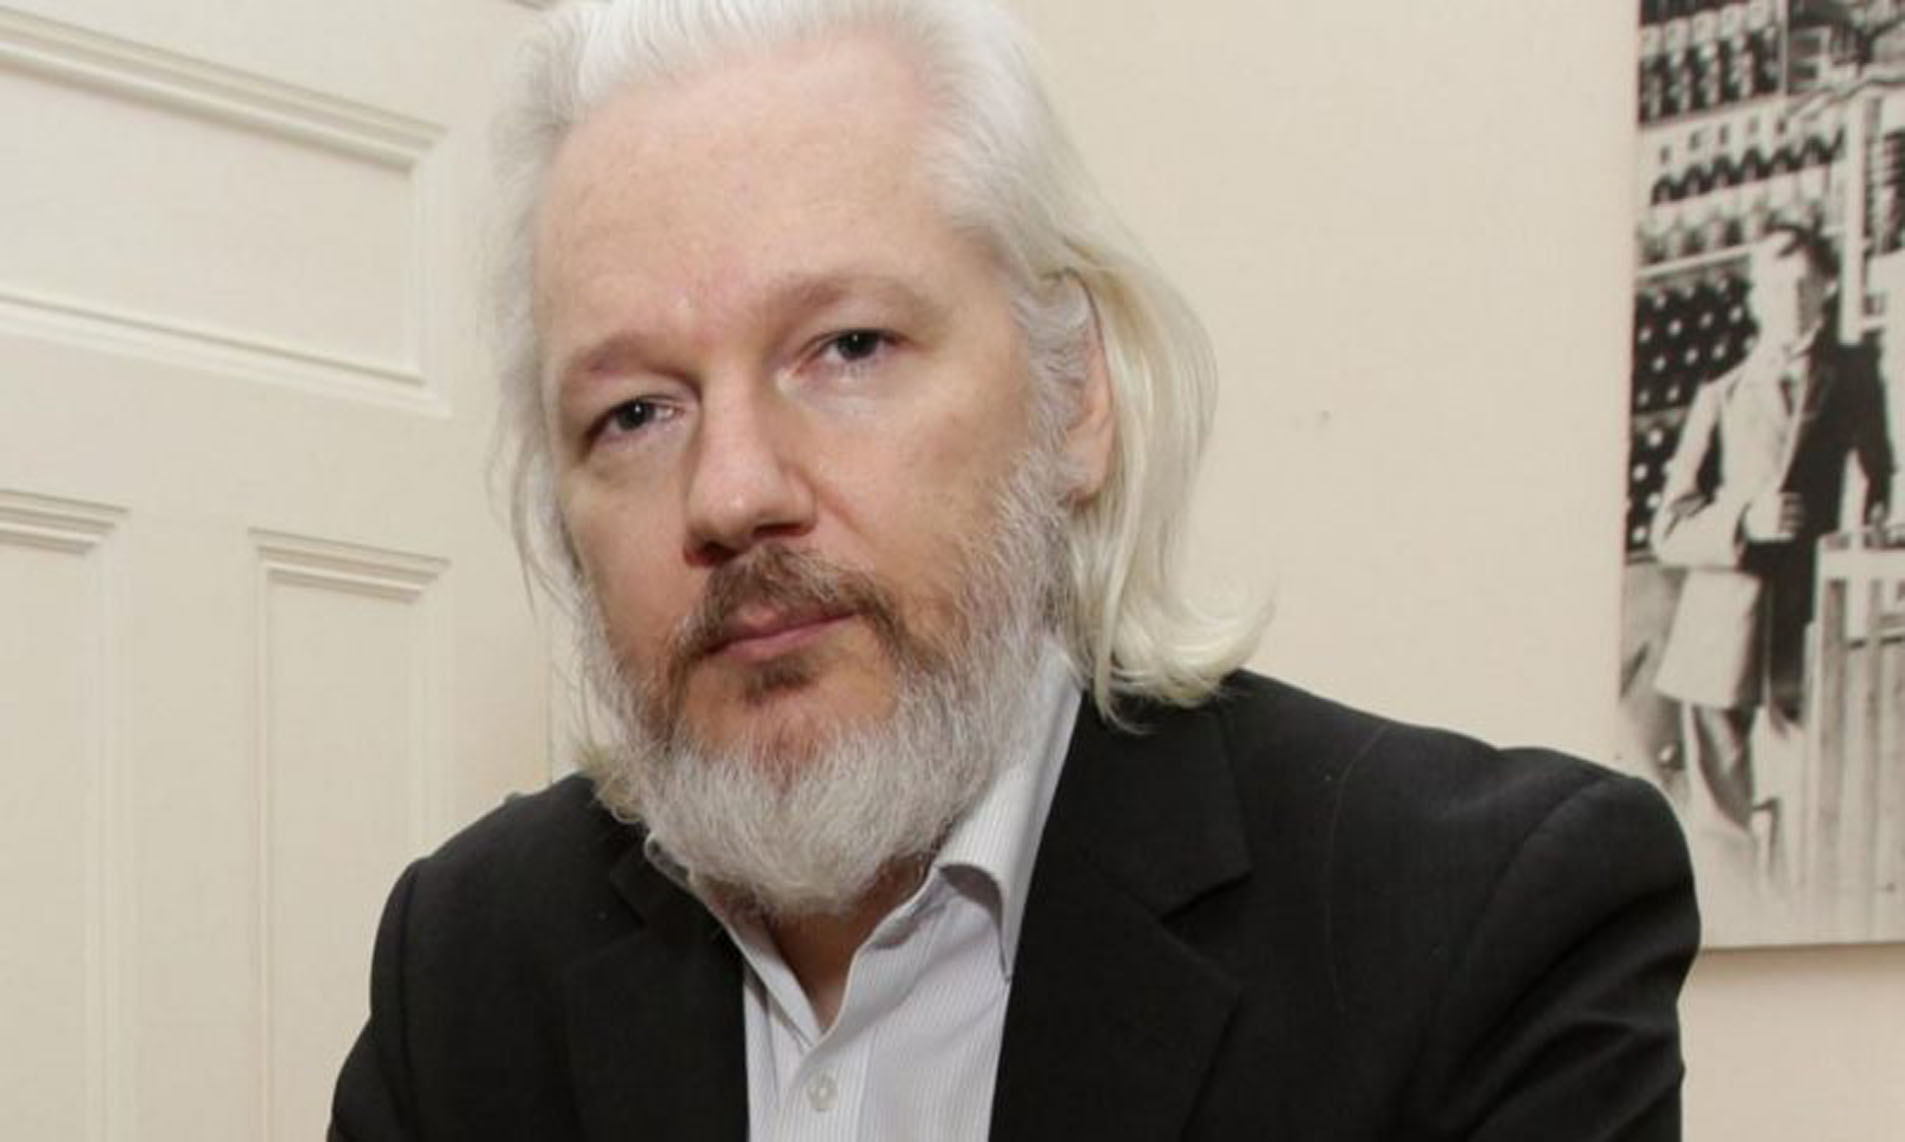 Suecia se negó a emitir arresto contra Assange